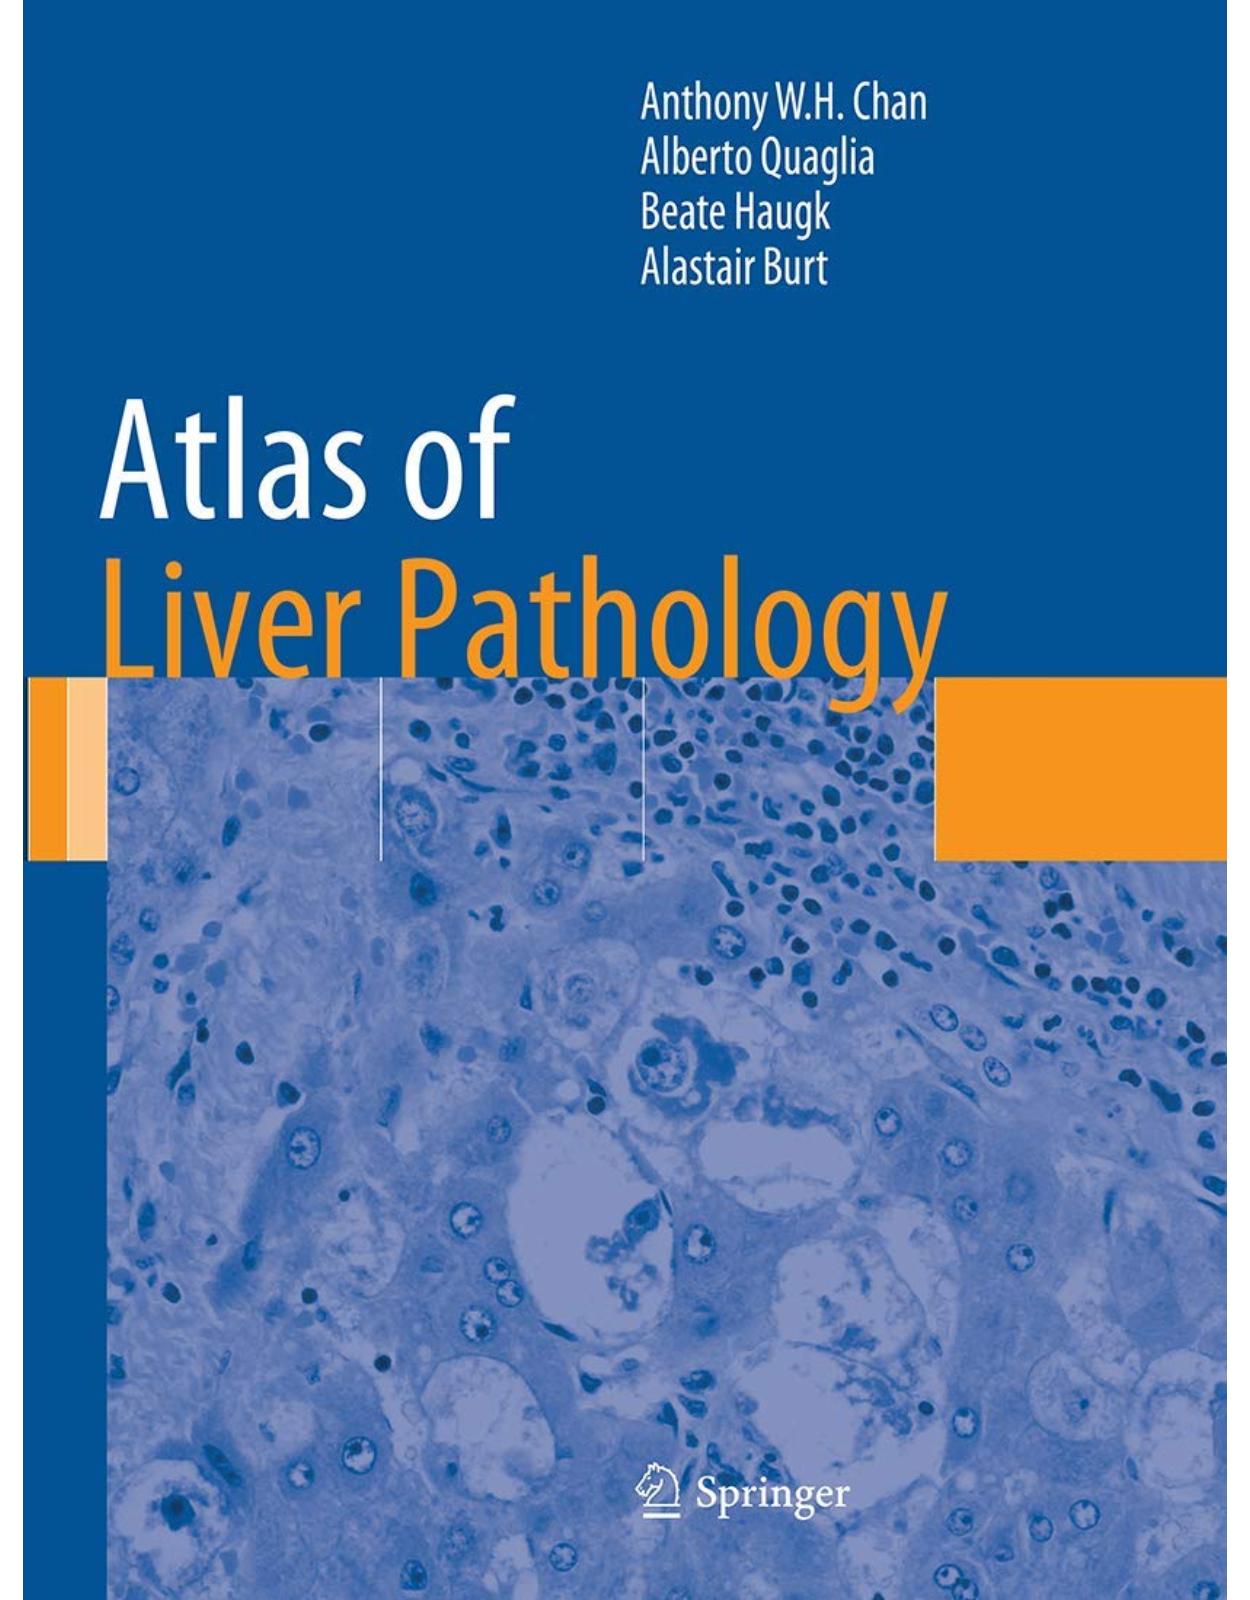 Atlas of Liver Pathology (Atlas of Anatomic Pathology) 